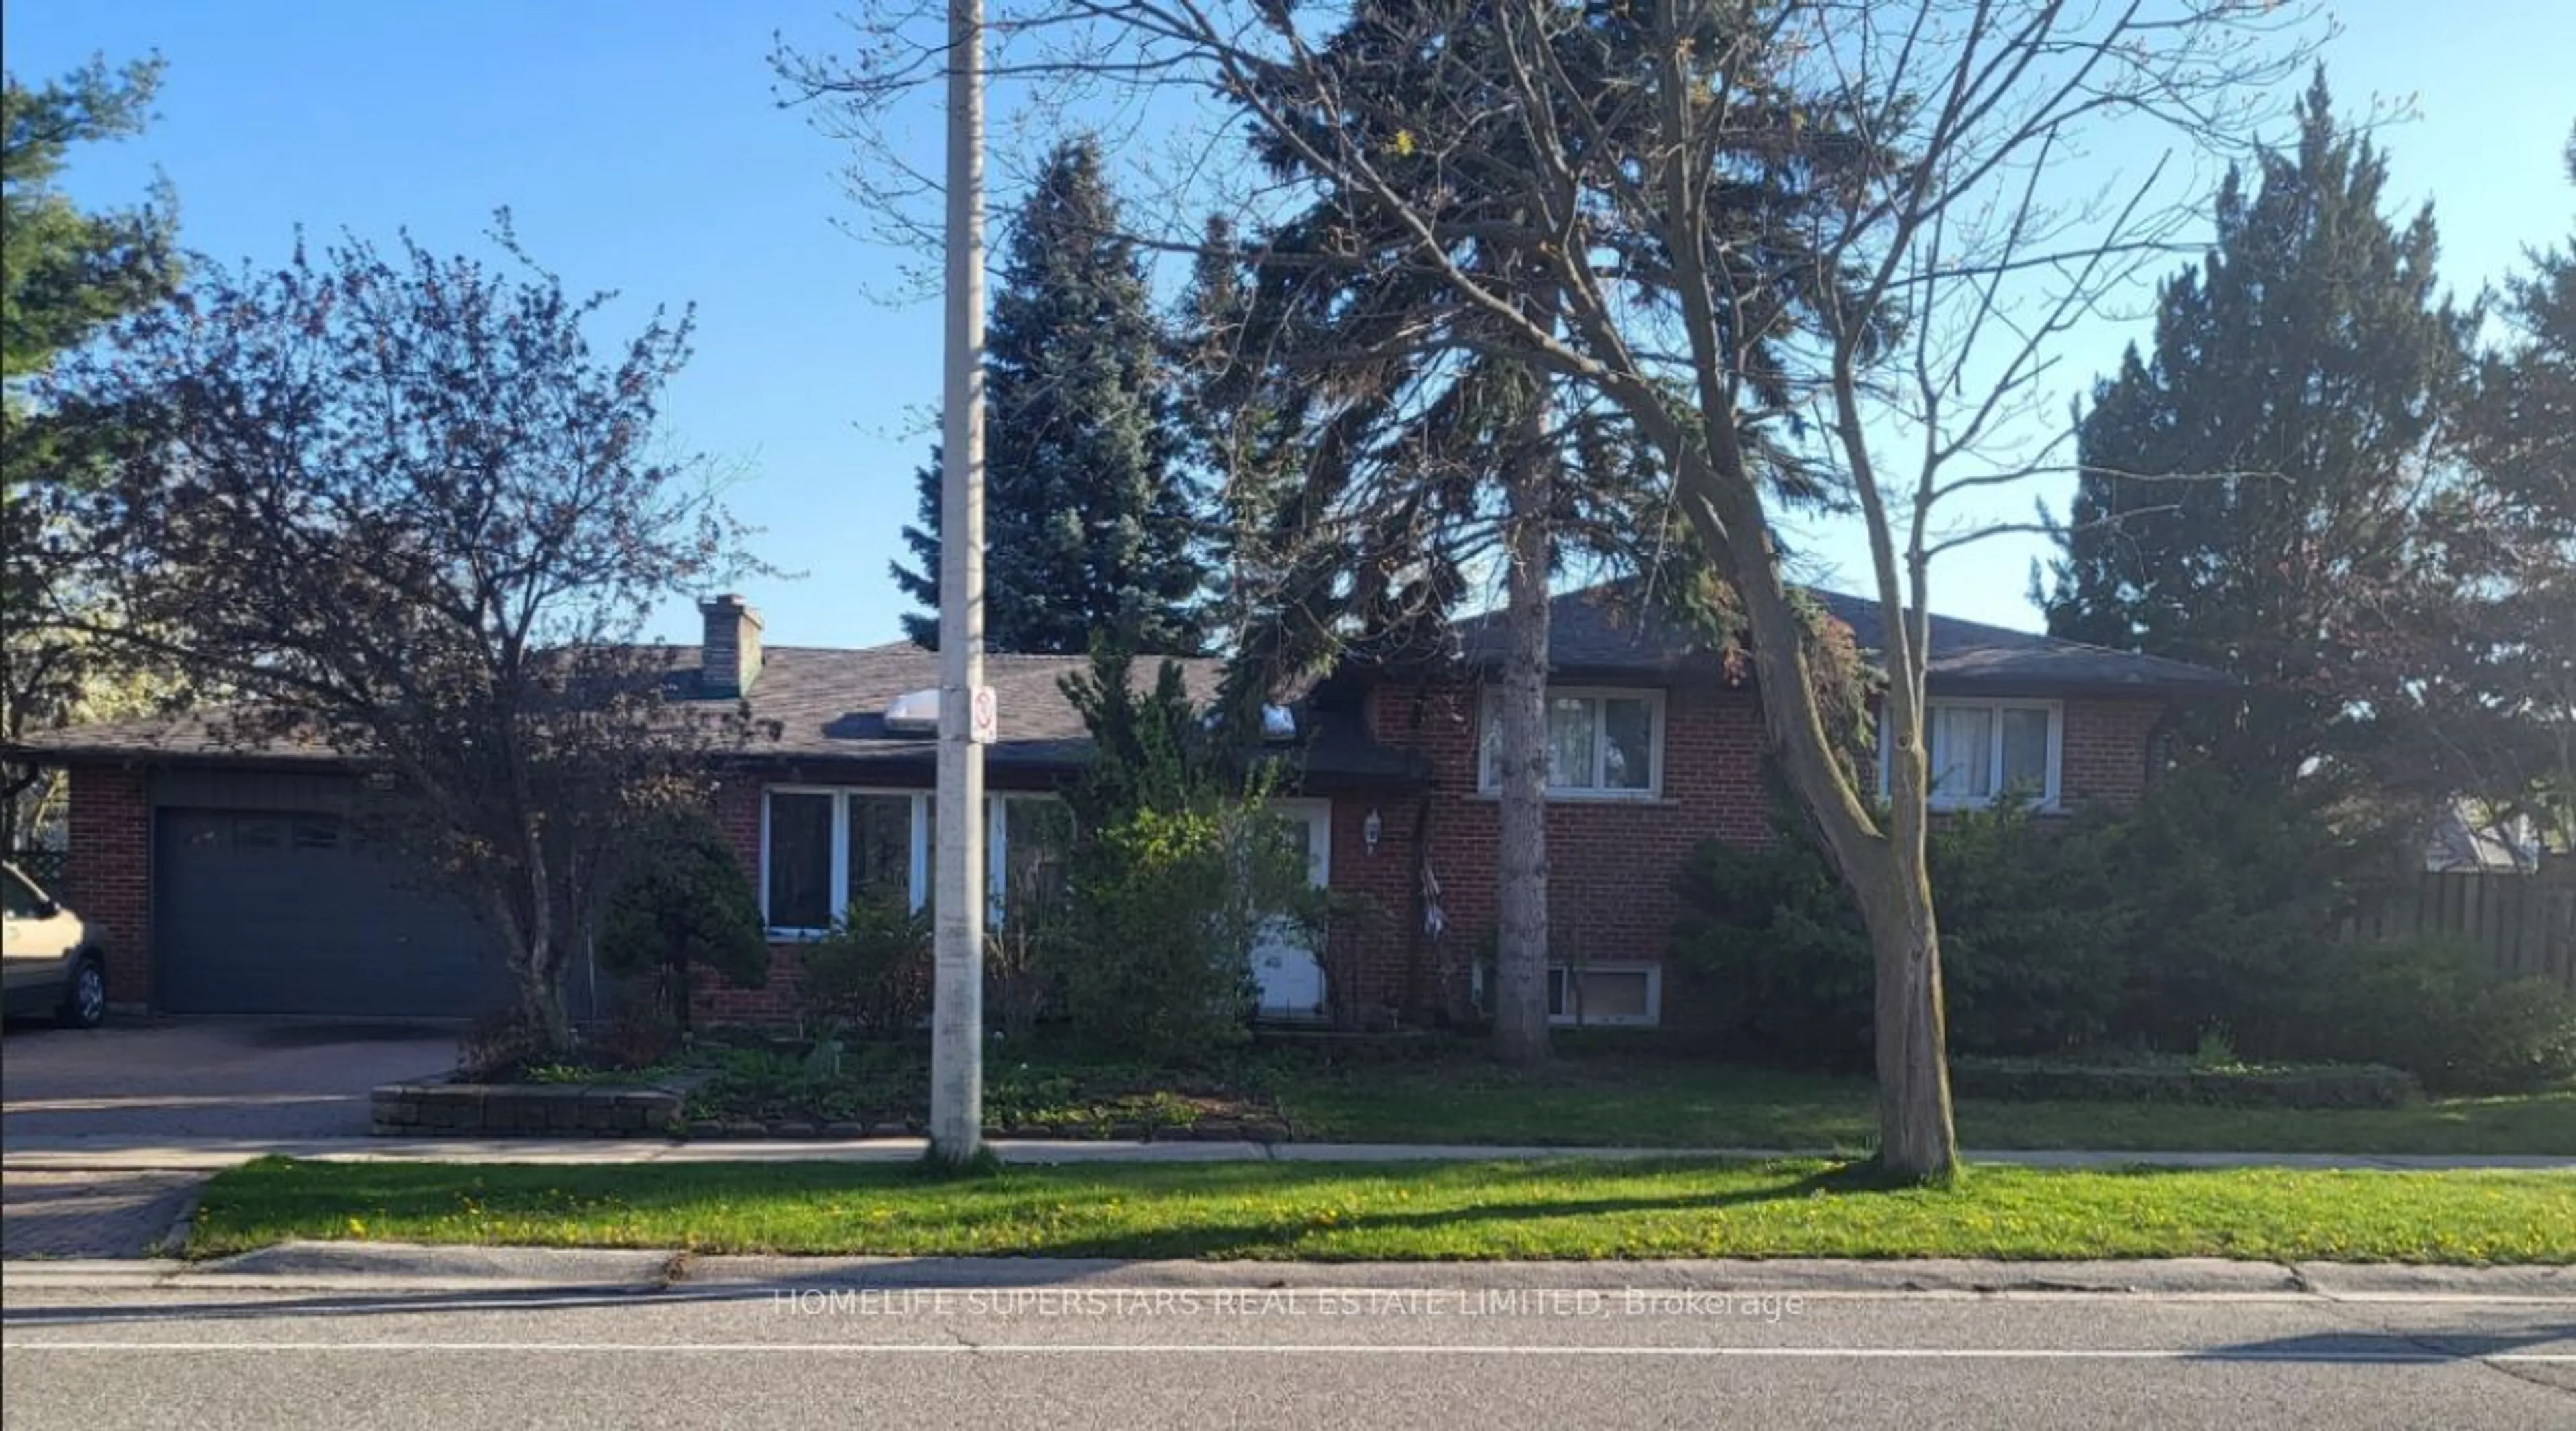 Frontside or backside of a home for 3230 Golden Orchard Dr, Mississauga Ontario L4Y 3G9